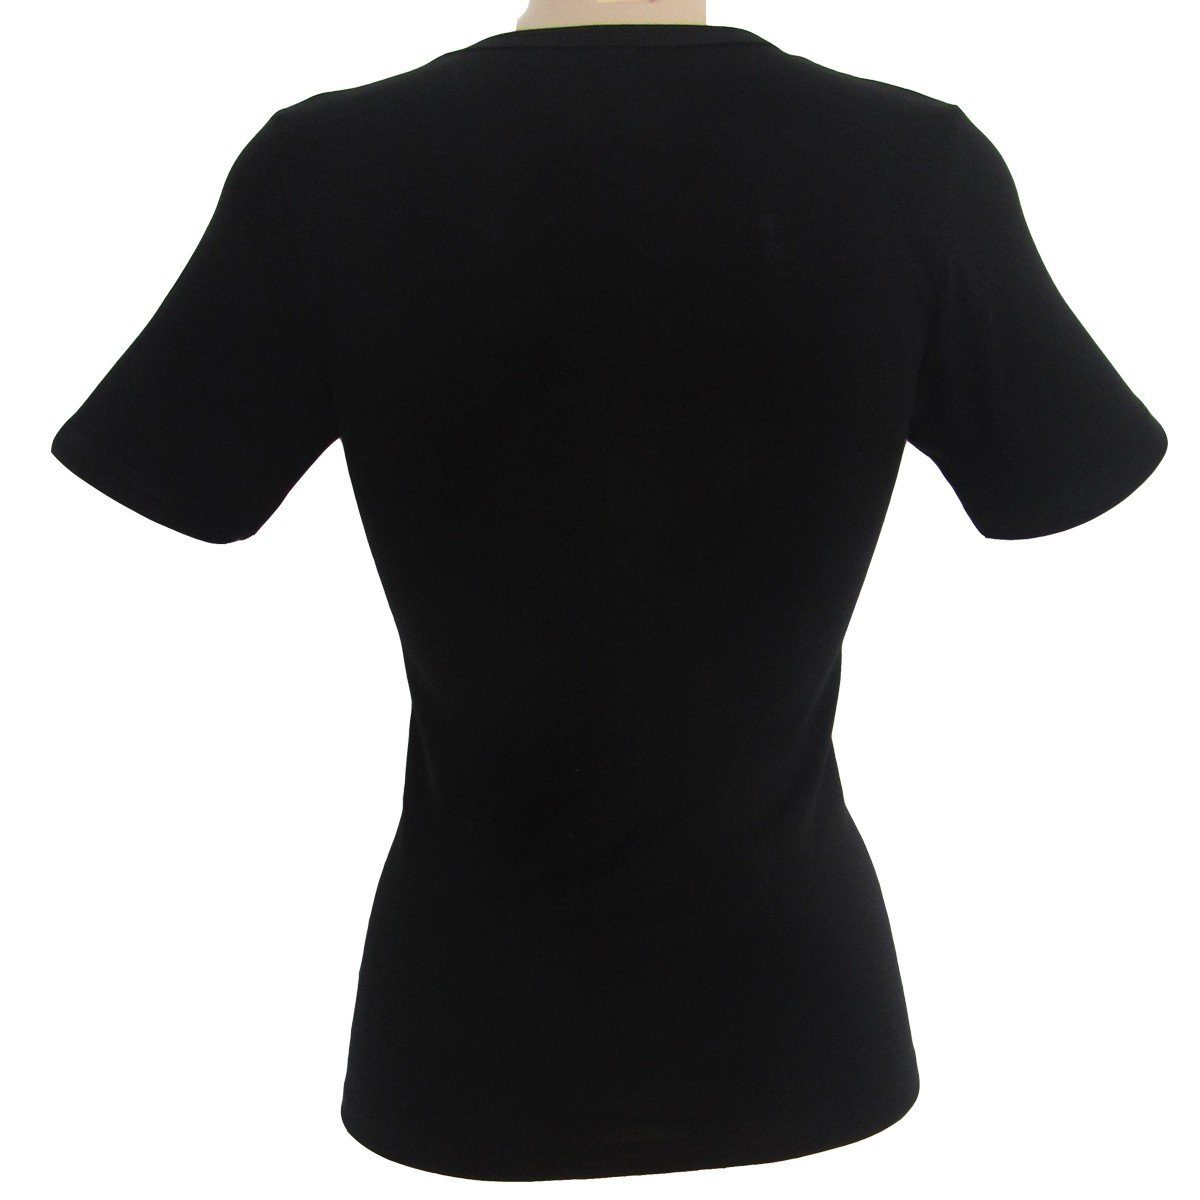 Unterziehshirt Modal schwarz Ausschnitt mit Baumwolle Shirt Damen / 17815 aus eckigem HERMKO kurzarm